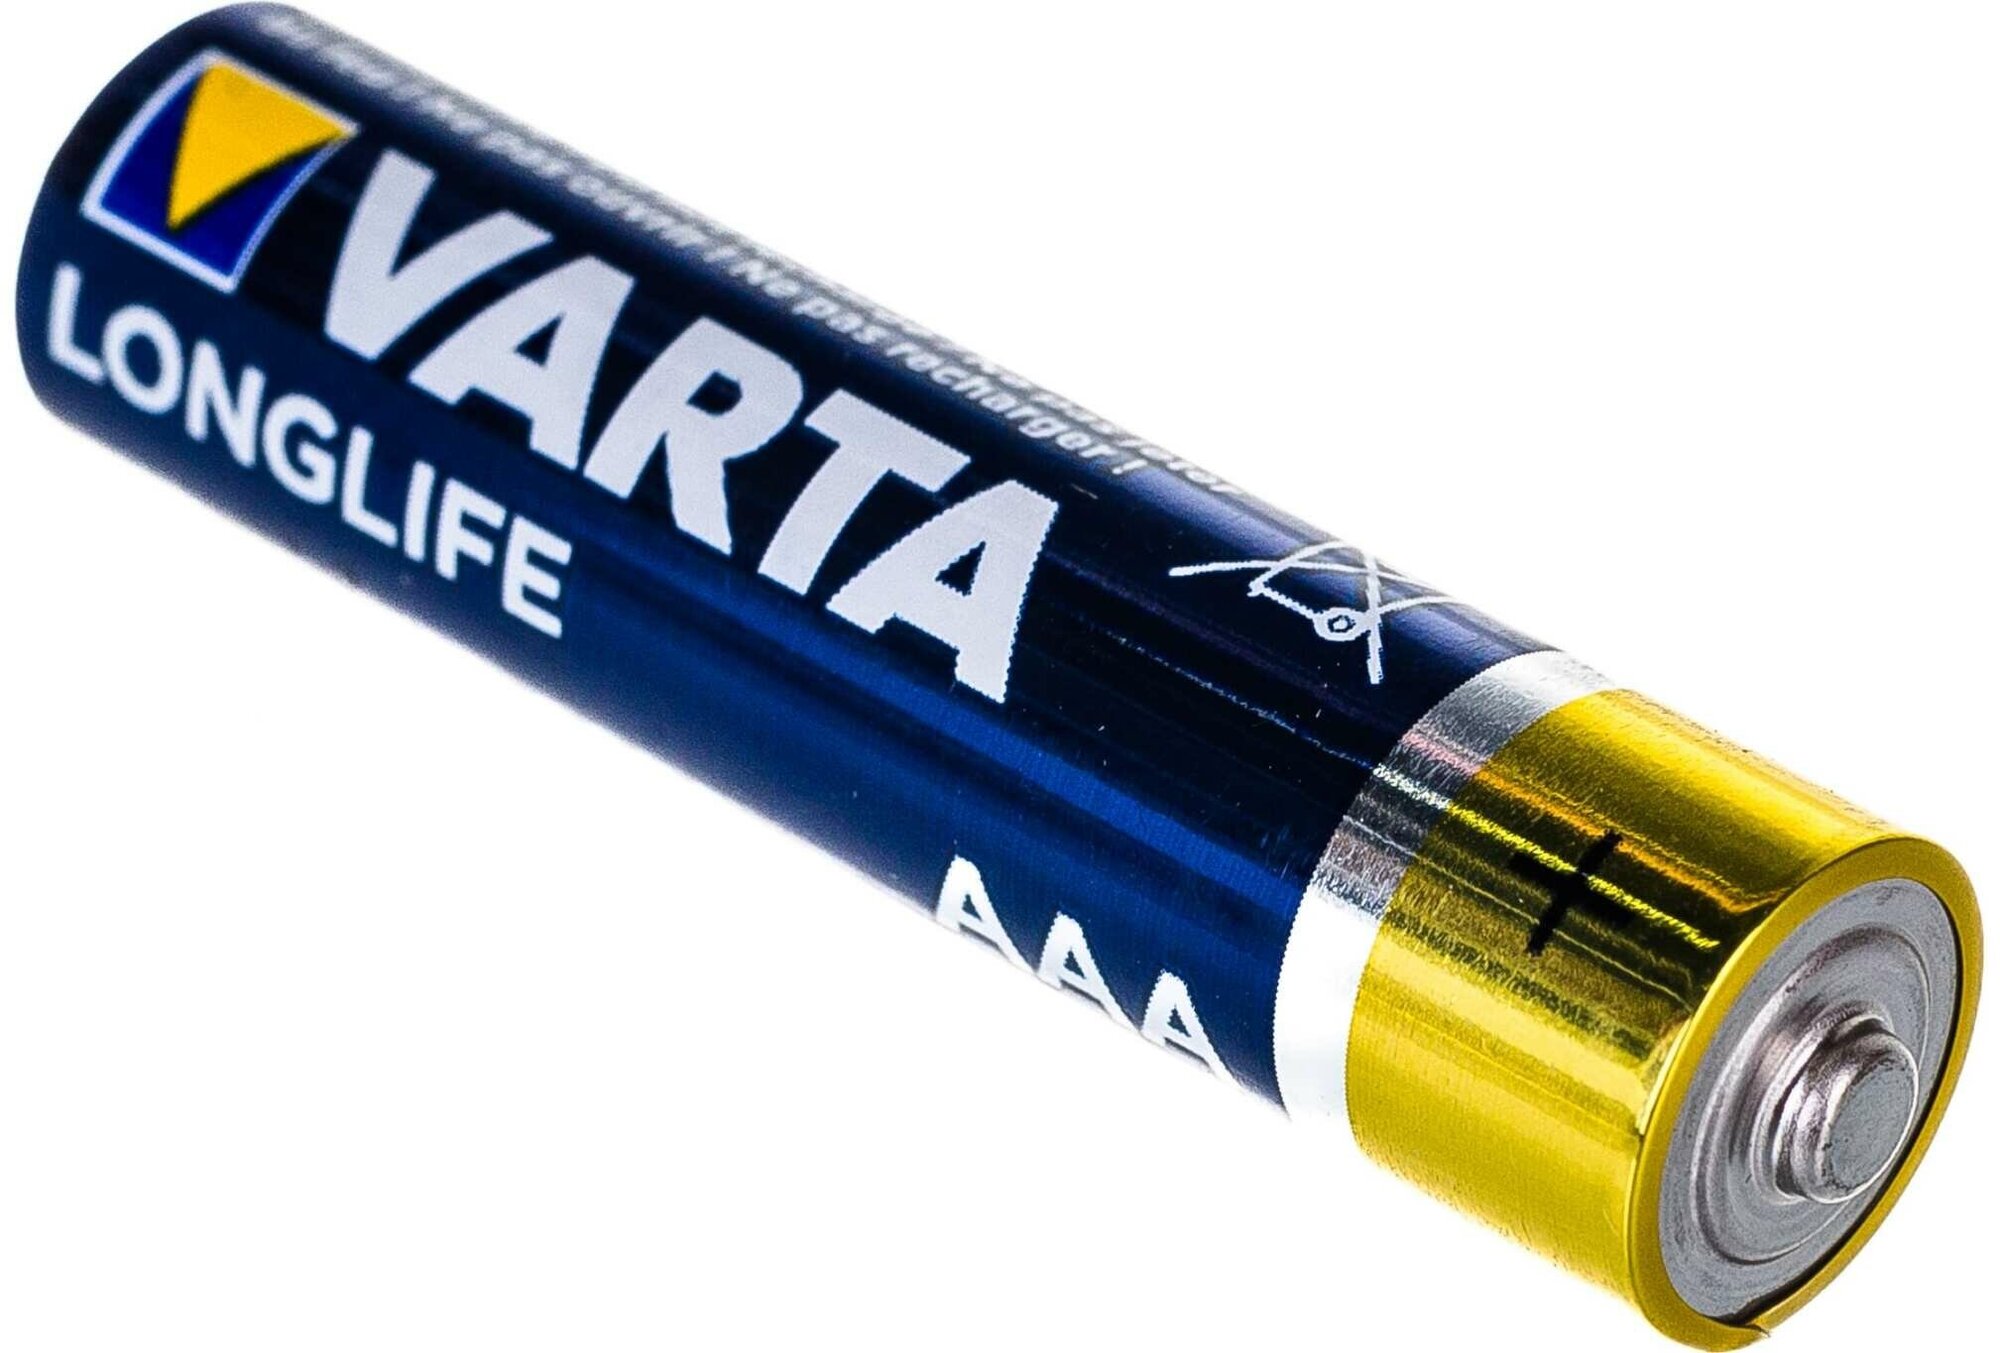 Батарейка VARTA LONGLIFE AAA